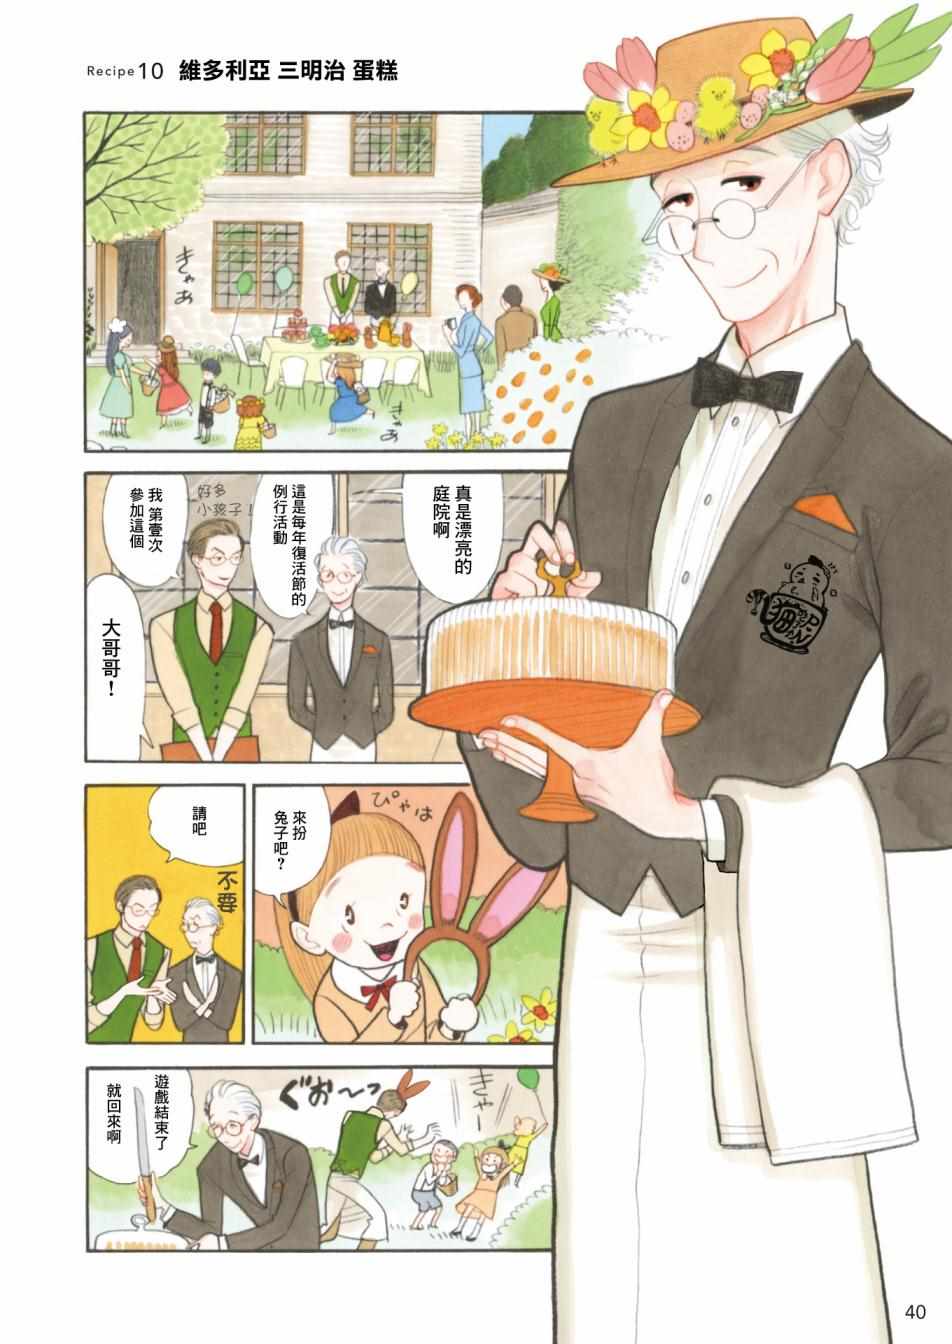 《R先生的甜点》漫画 010集